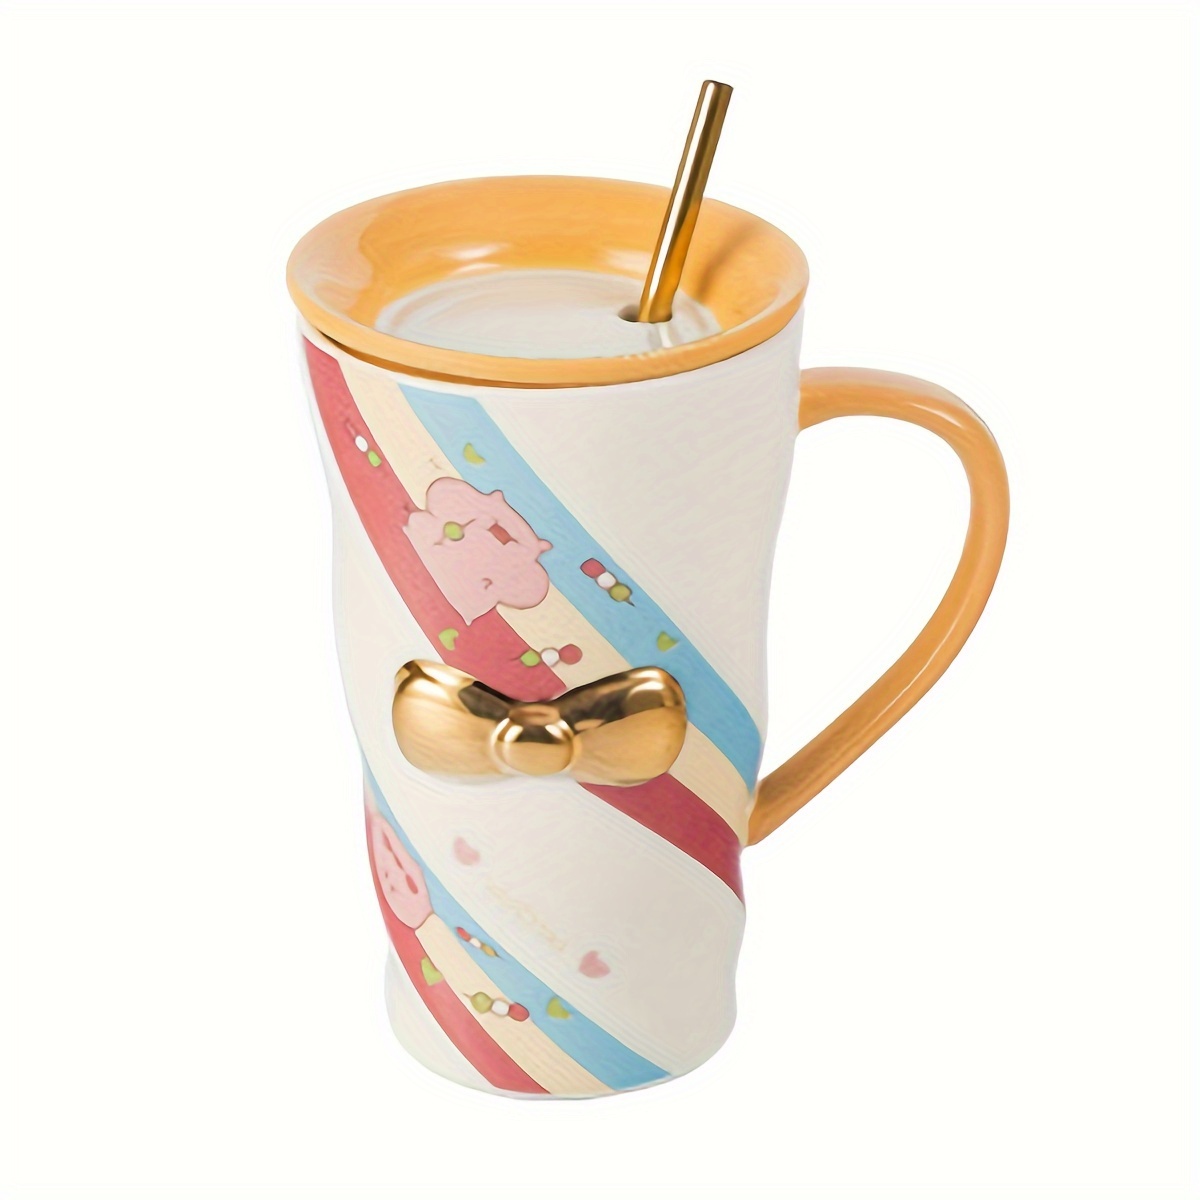 Tea Mug With Lid And Straw, Cute Golden Bow Decor Ceramic Mug